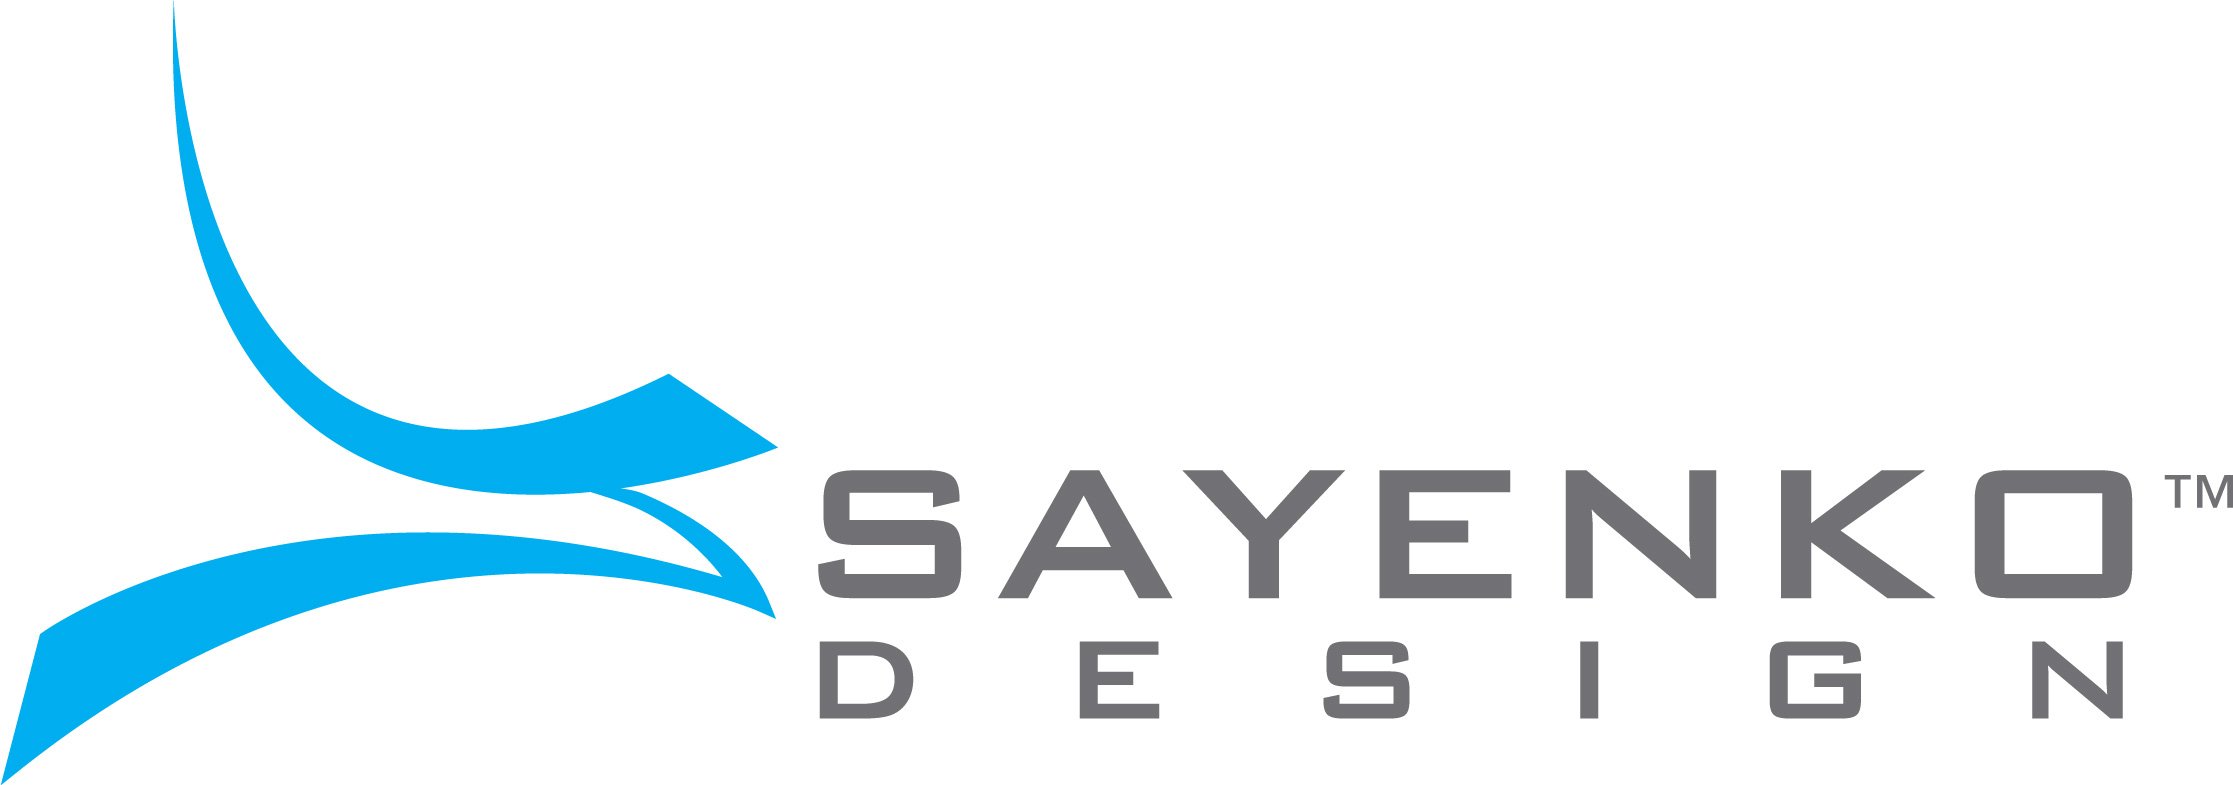 Top Website Design Company Logo: Sayenko Design